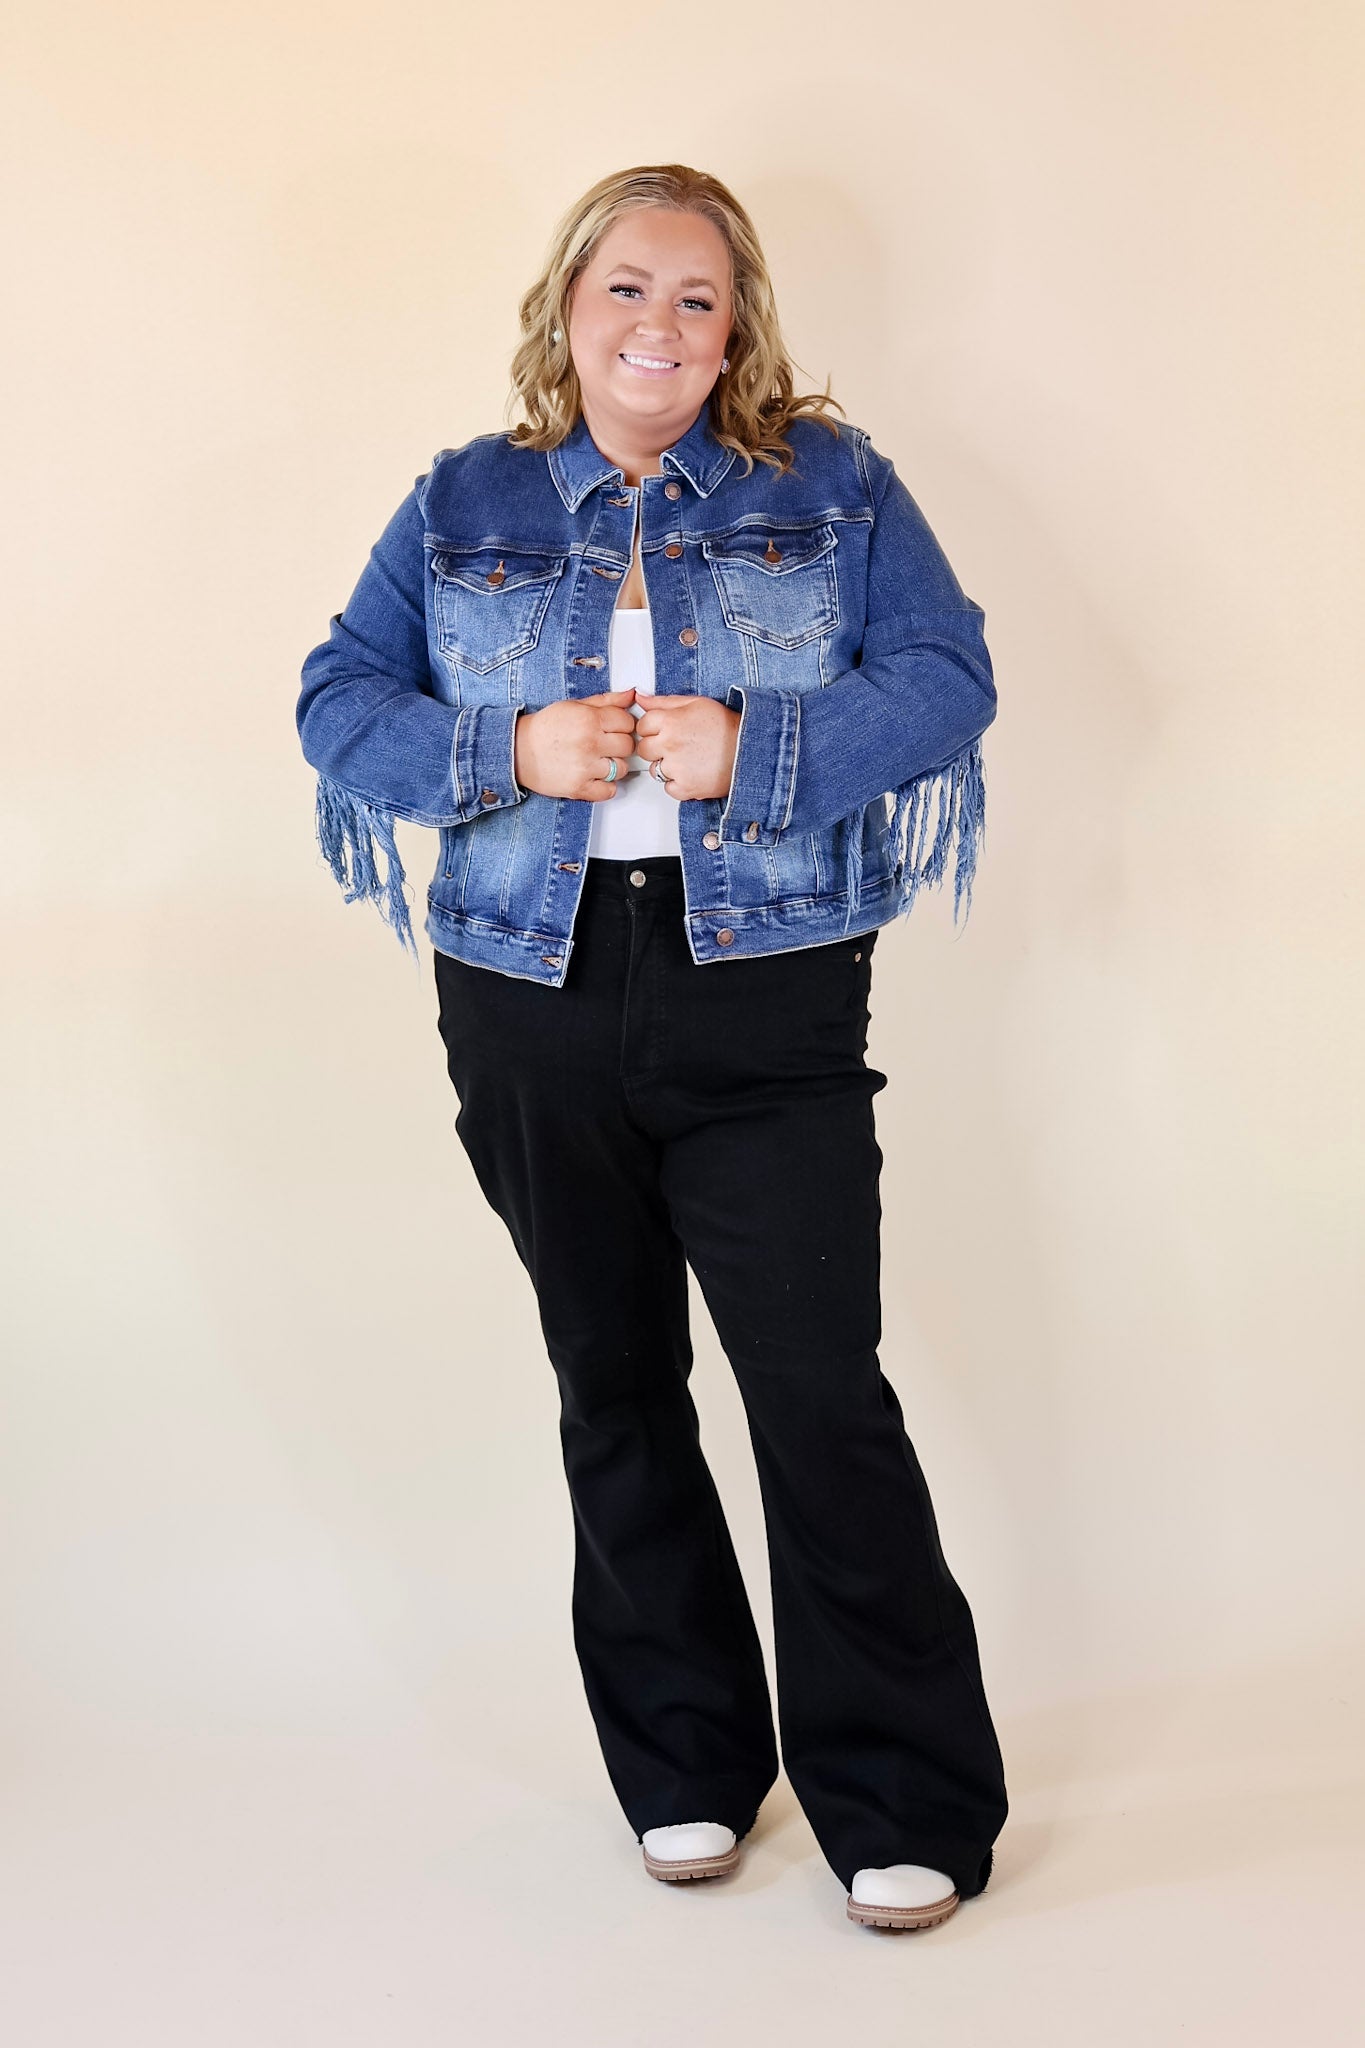 Judy Blue | At The Top Frayed Denim Fringe Jacket in Medium Wash - Giddy Up Glamour Boutique